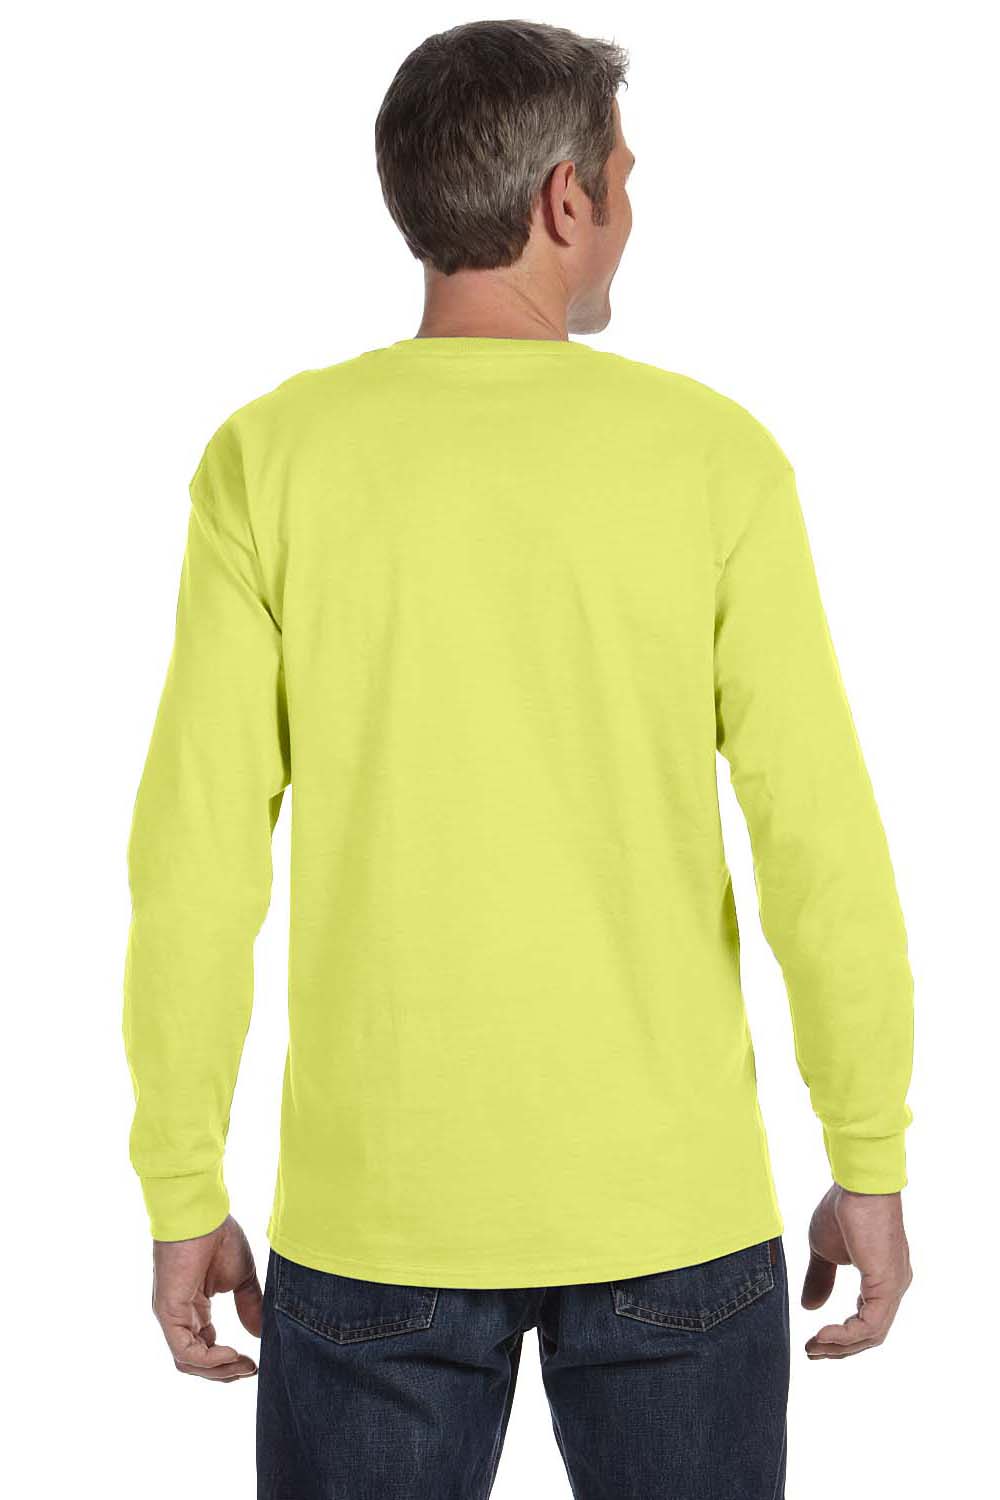 Jerzees 29L Mens Dri-Power Moisture Wicking Long Sleeve Crewneck T-Shirt Safety Green Back